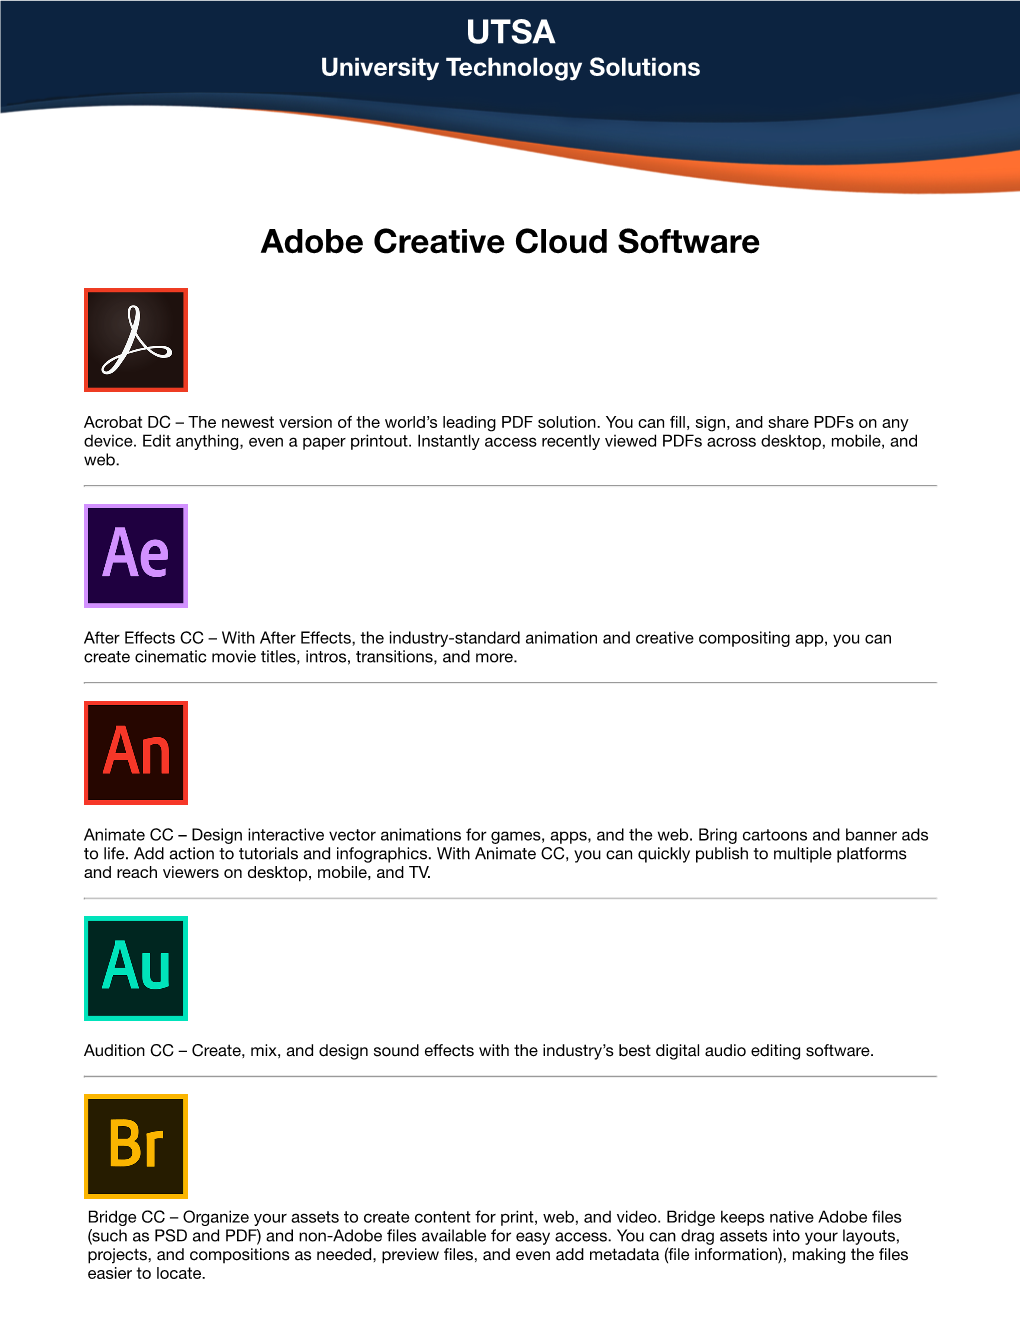 UTSA Adobe Creative Cloud Software